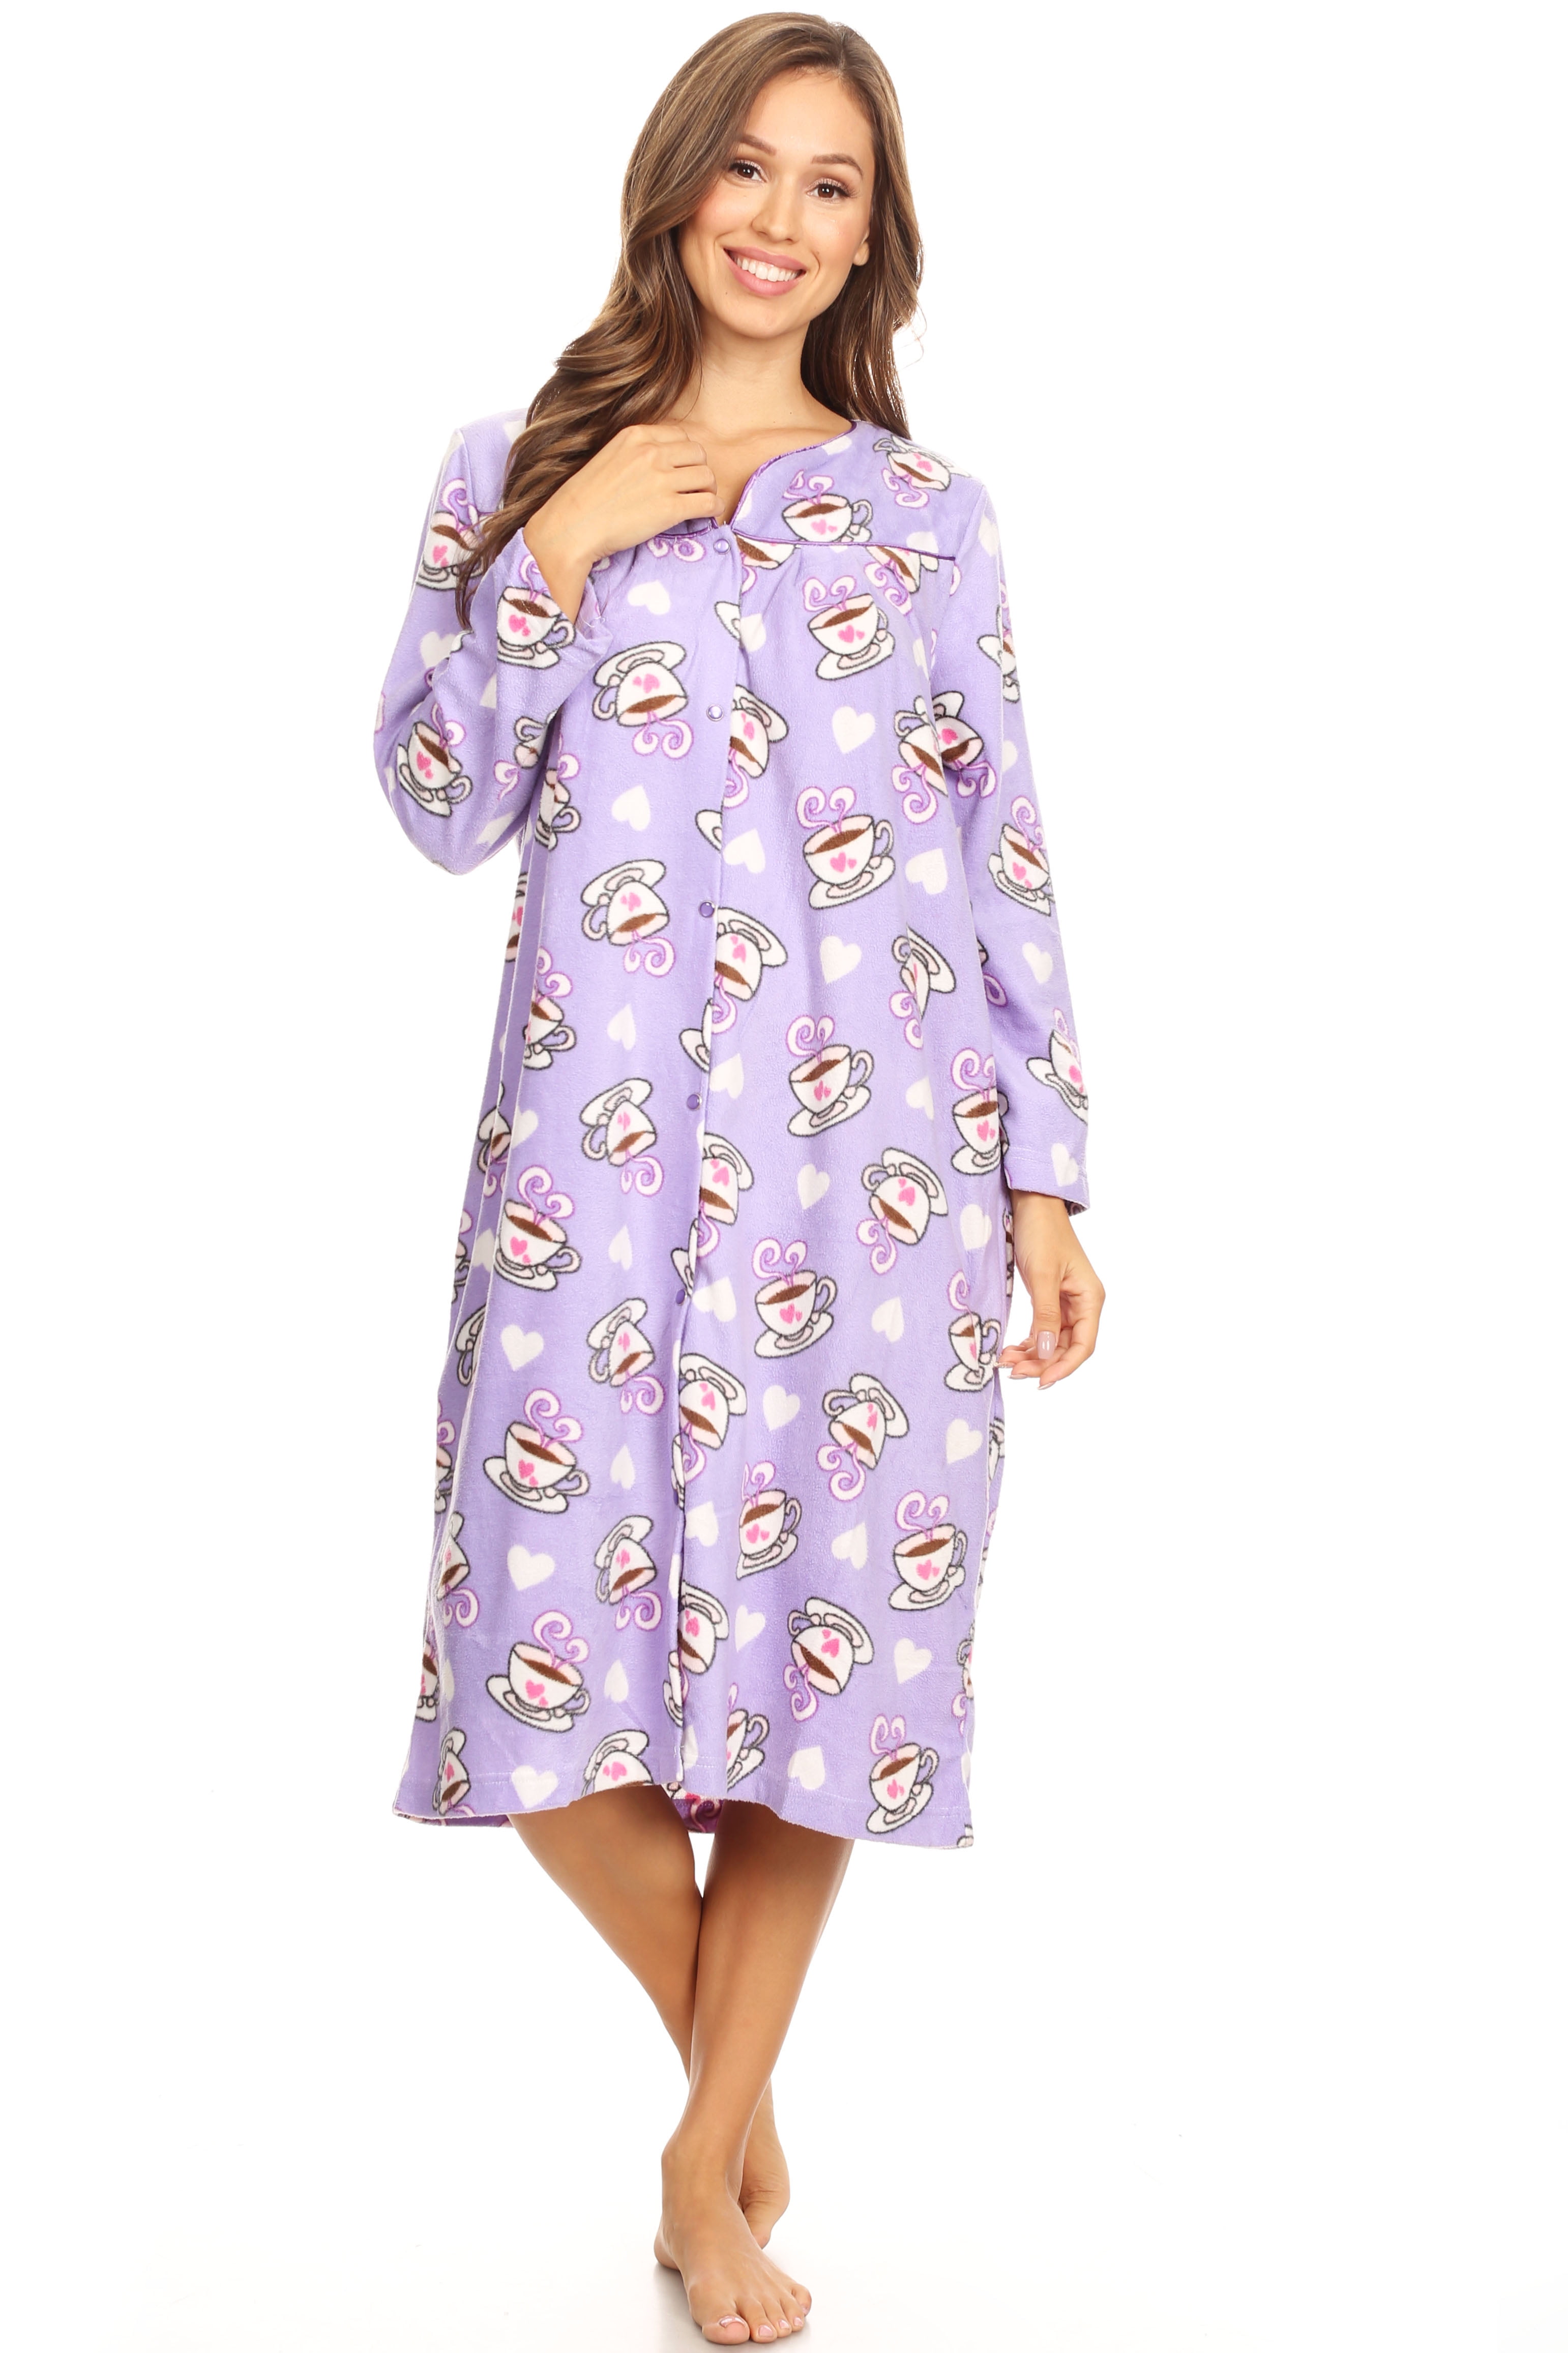 Patricia Lingerie Womens Long Housedress Shortsleeve Ultra Soft Cotton Nightgown Pyjama